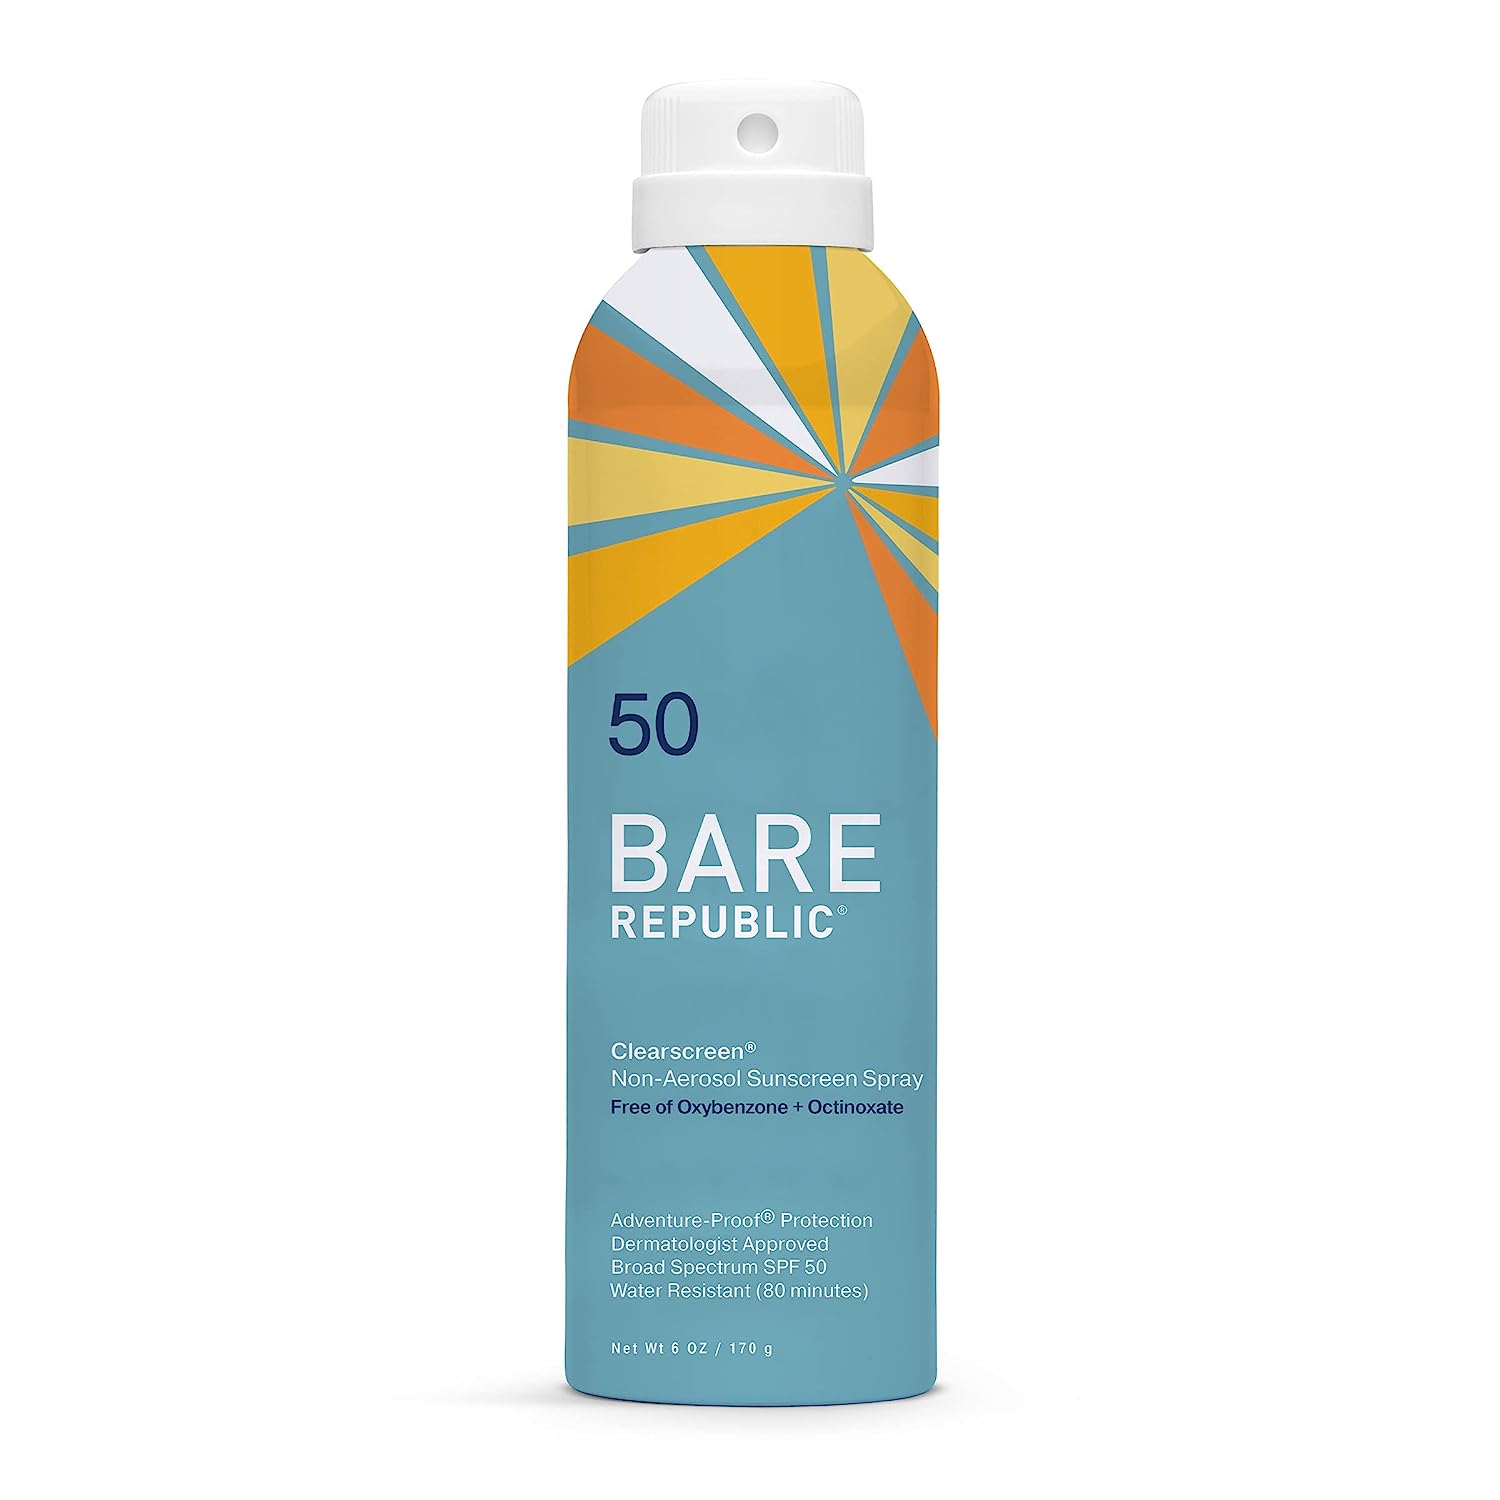 Bare Republic Clearscreen Sunscreen SPF 50 Sunblock [...]